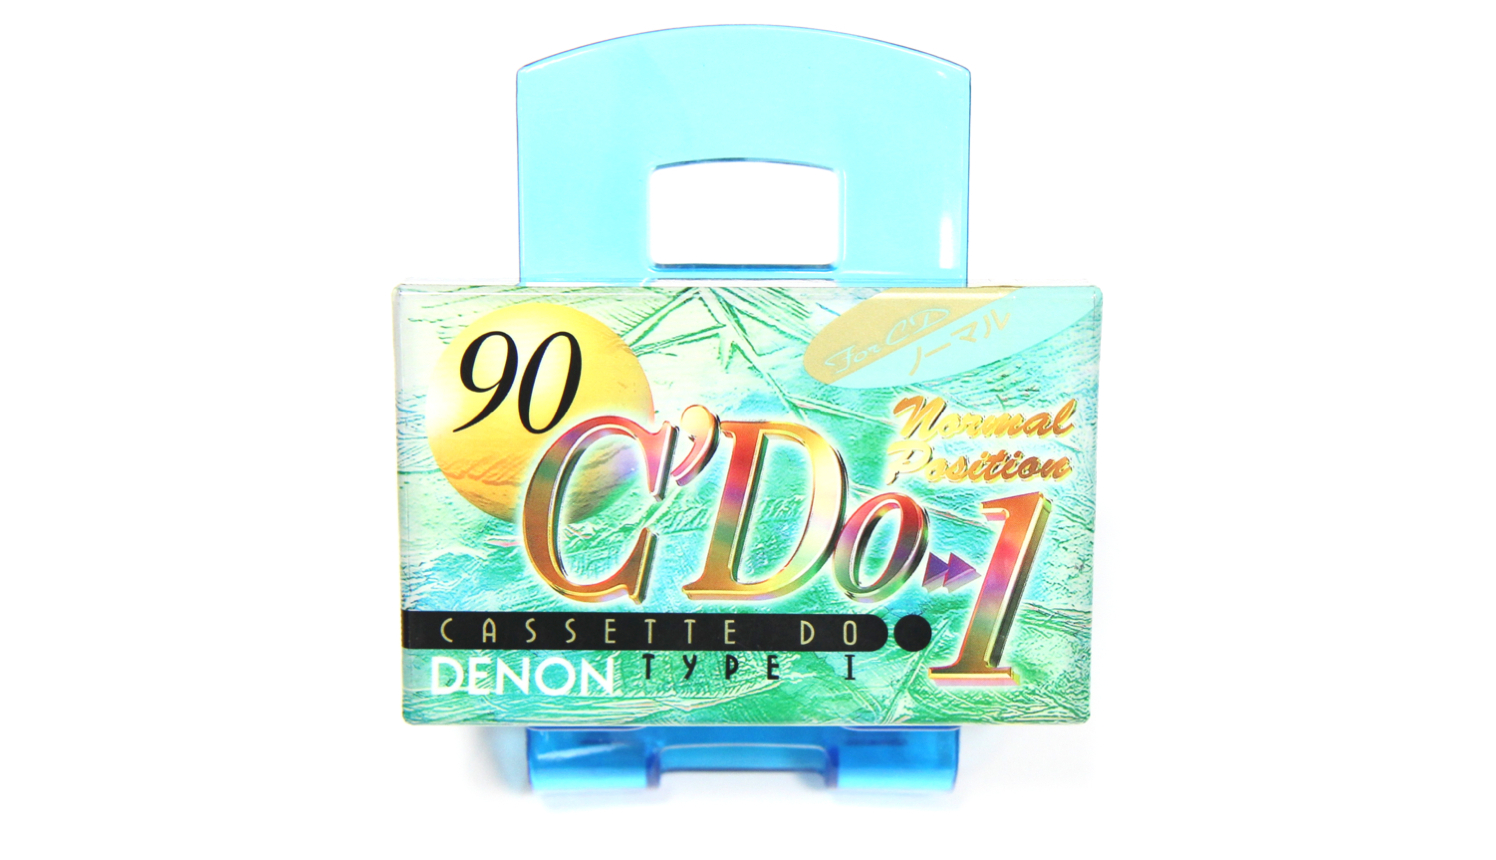 DENON C'DO1-90 Japan